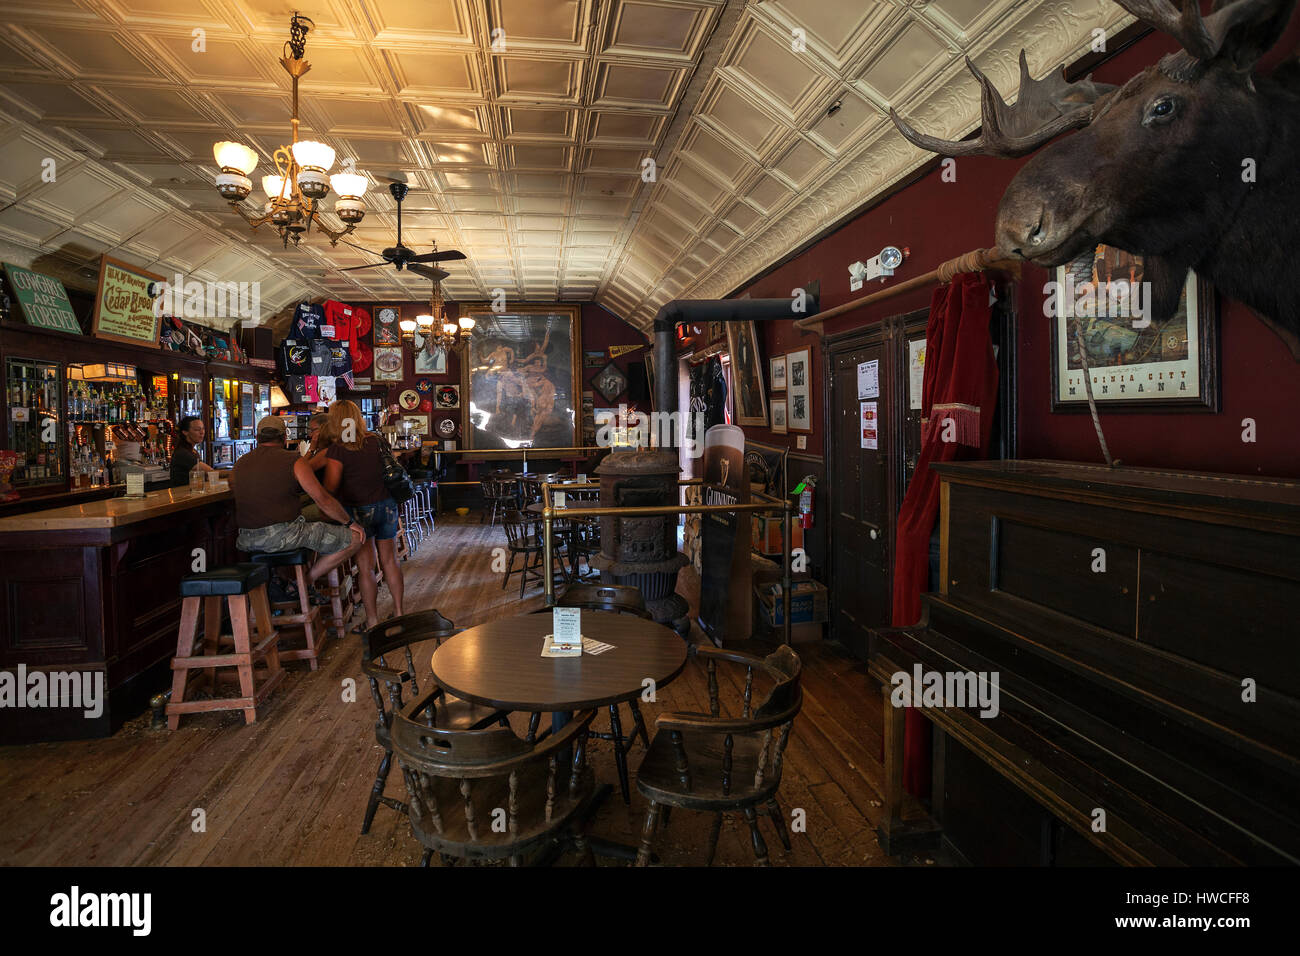 Bar, Saloon, Indoors, Virginia City, former gold mining town, Montana Province, USA Stock Photo